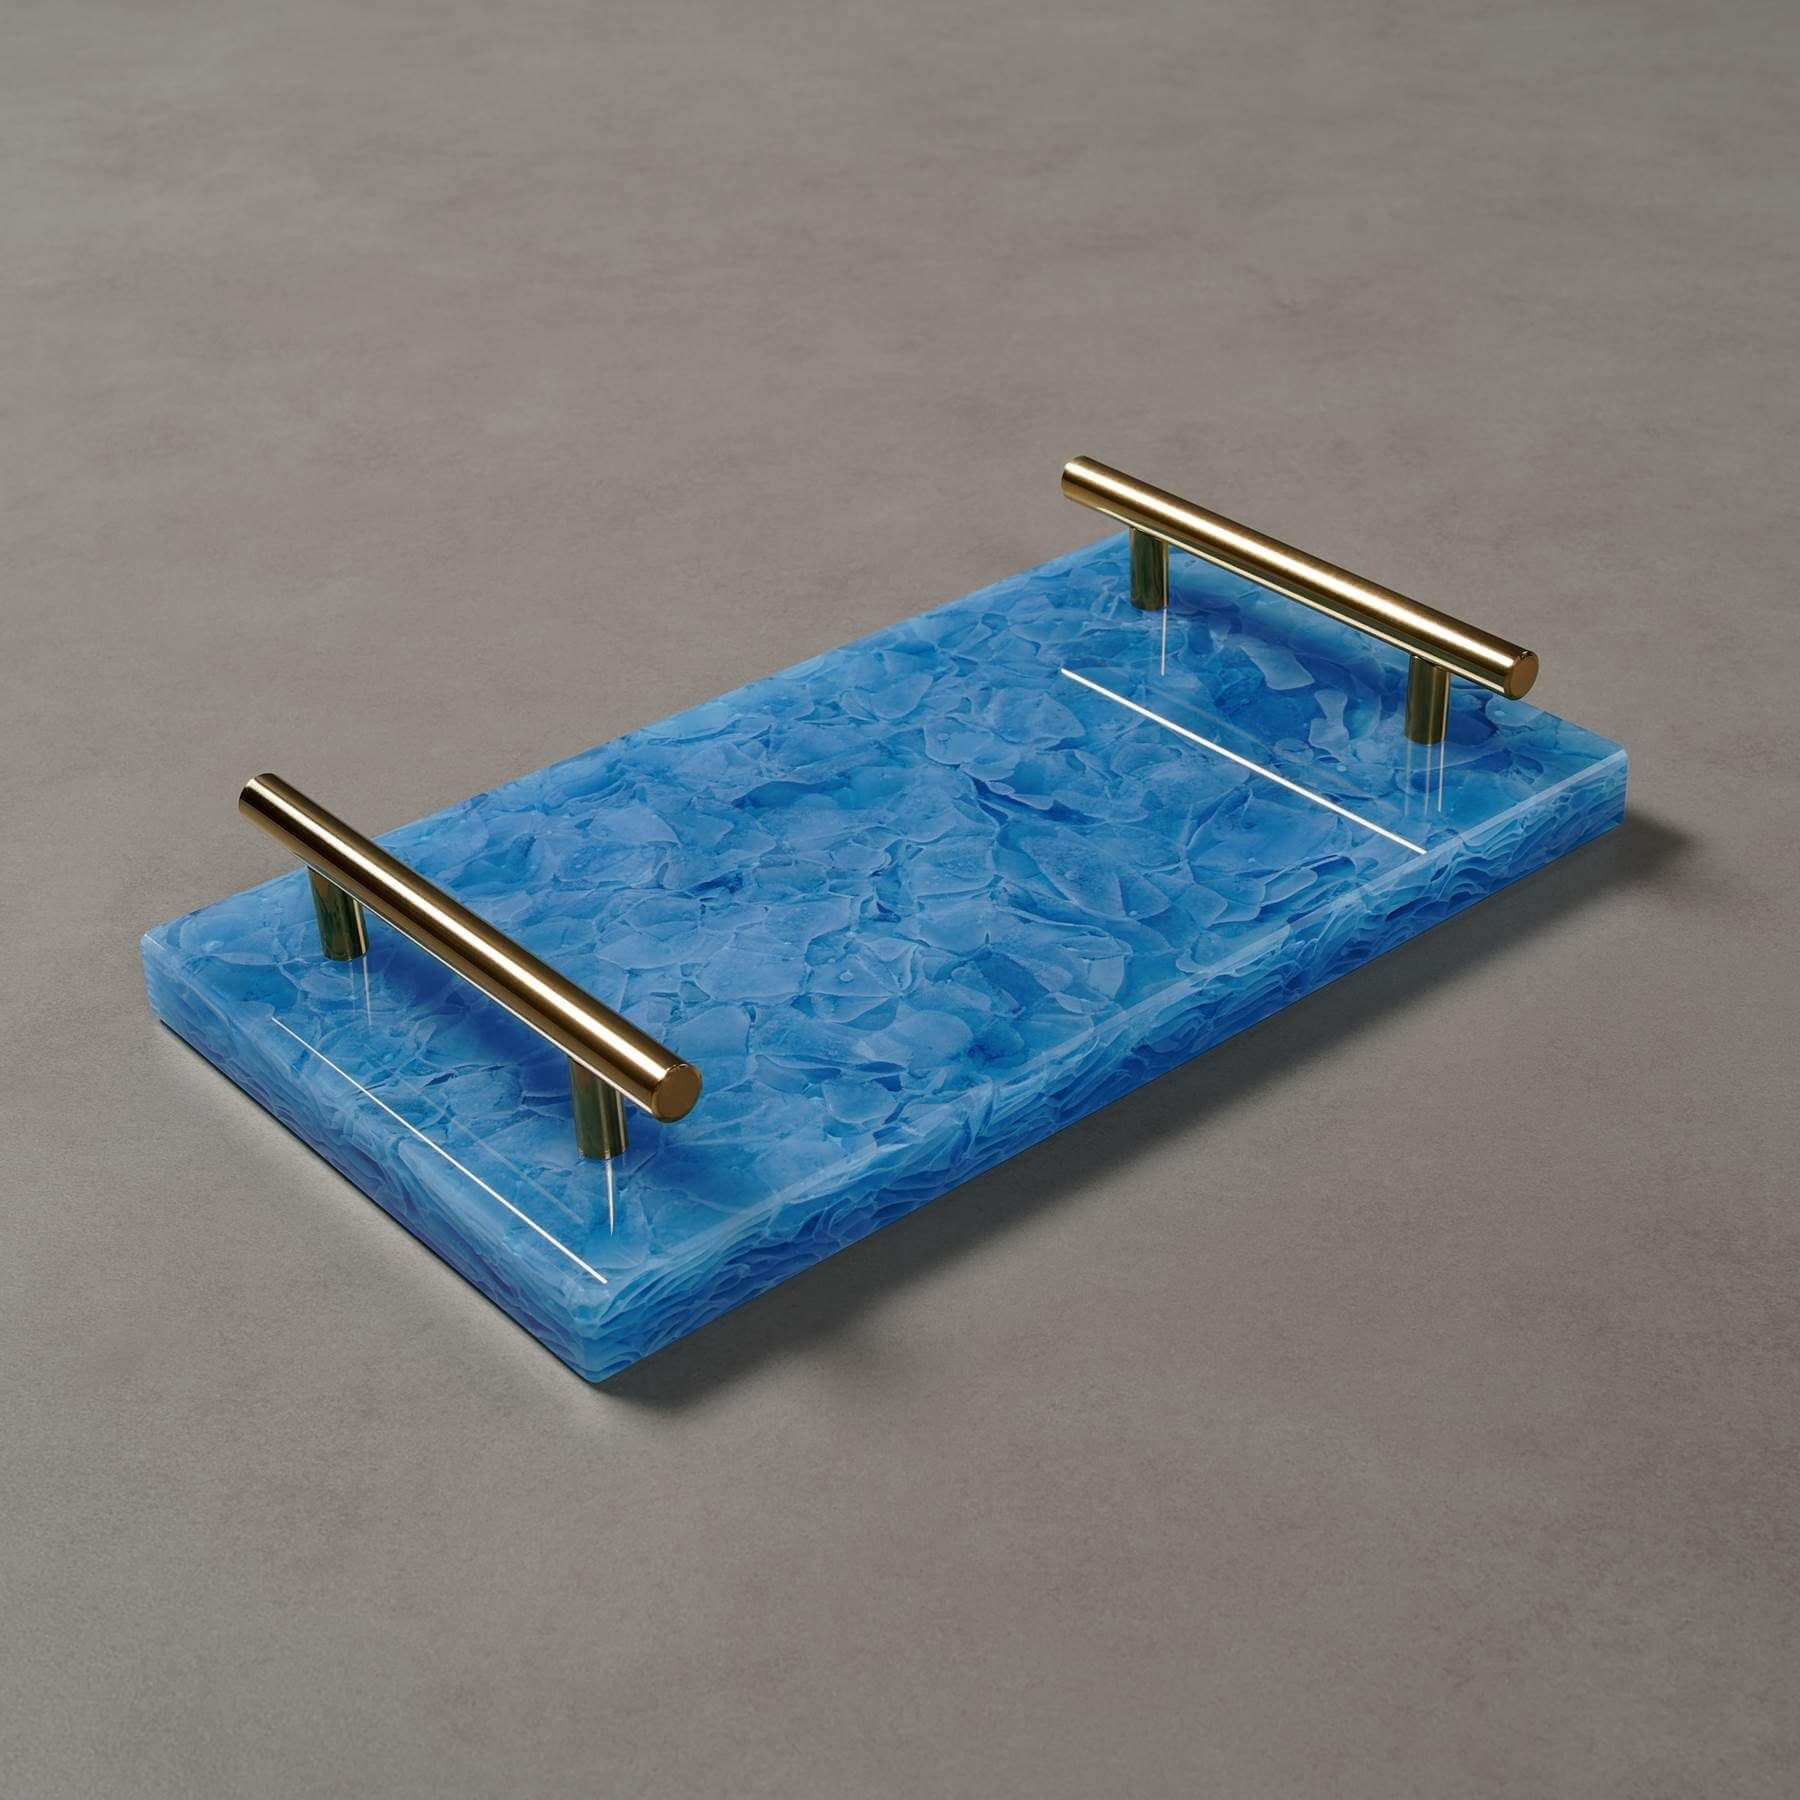 MAGNA Atelier Dekotablett NOTTING HILL mit GLASKERAMIK, Tablet, silber gold Metallgestell, 30x17x5cm Ocean Blue